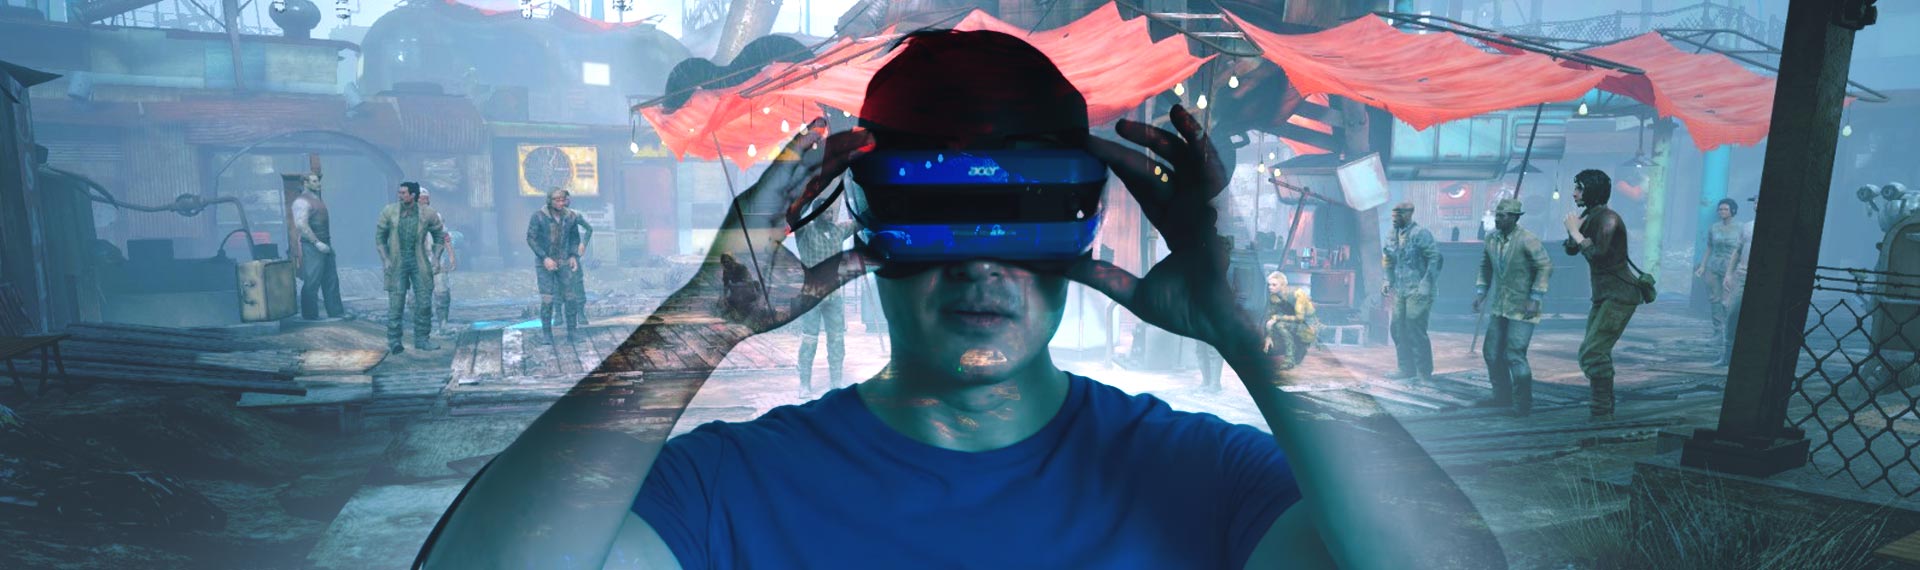 3 Cara Seru Menikmati Teknologi Virtual Reality dengan Keluarga